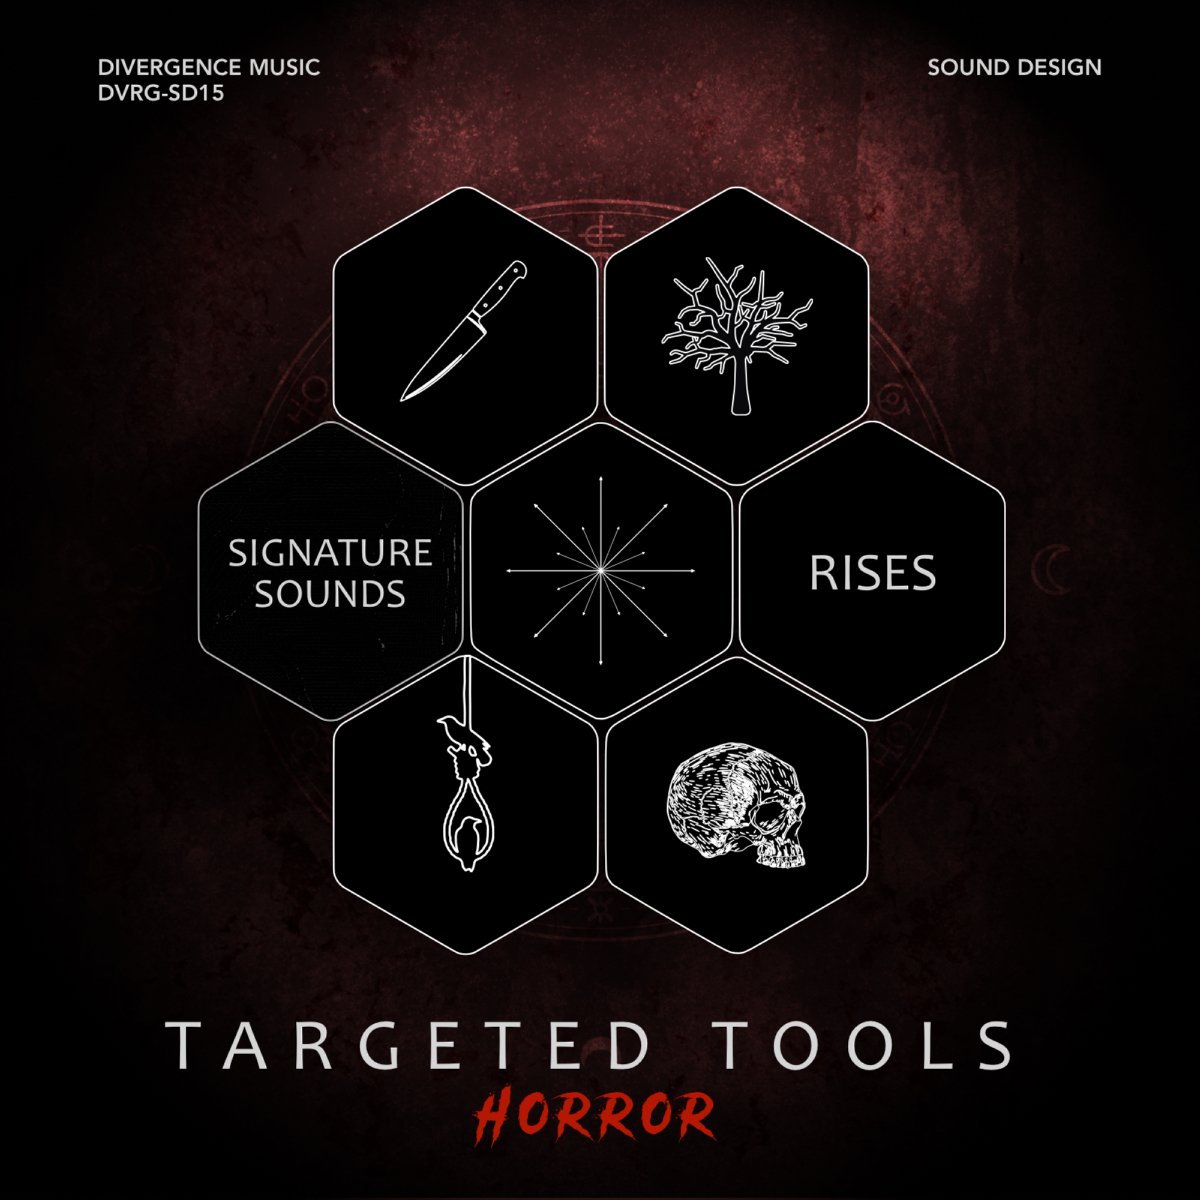 DVRG-SD15 Targeted Tools_ Horror - Signature Sounds & Rises (sound design)_cover.jpg